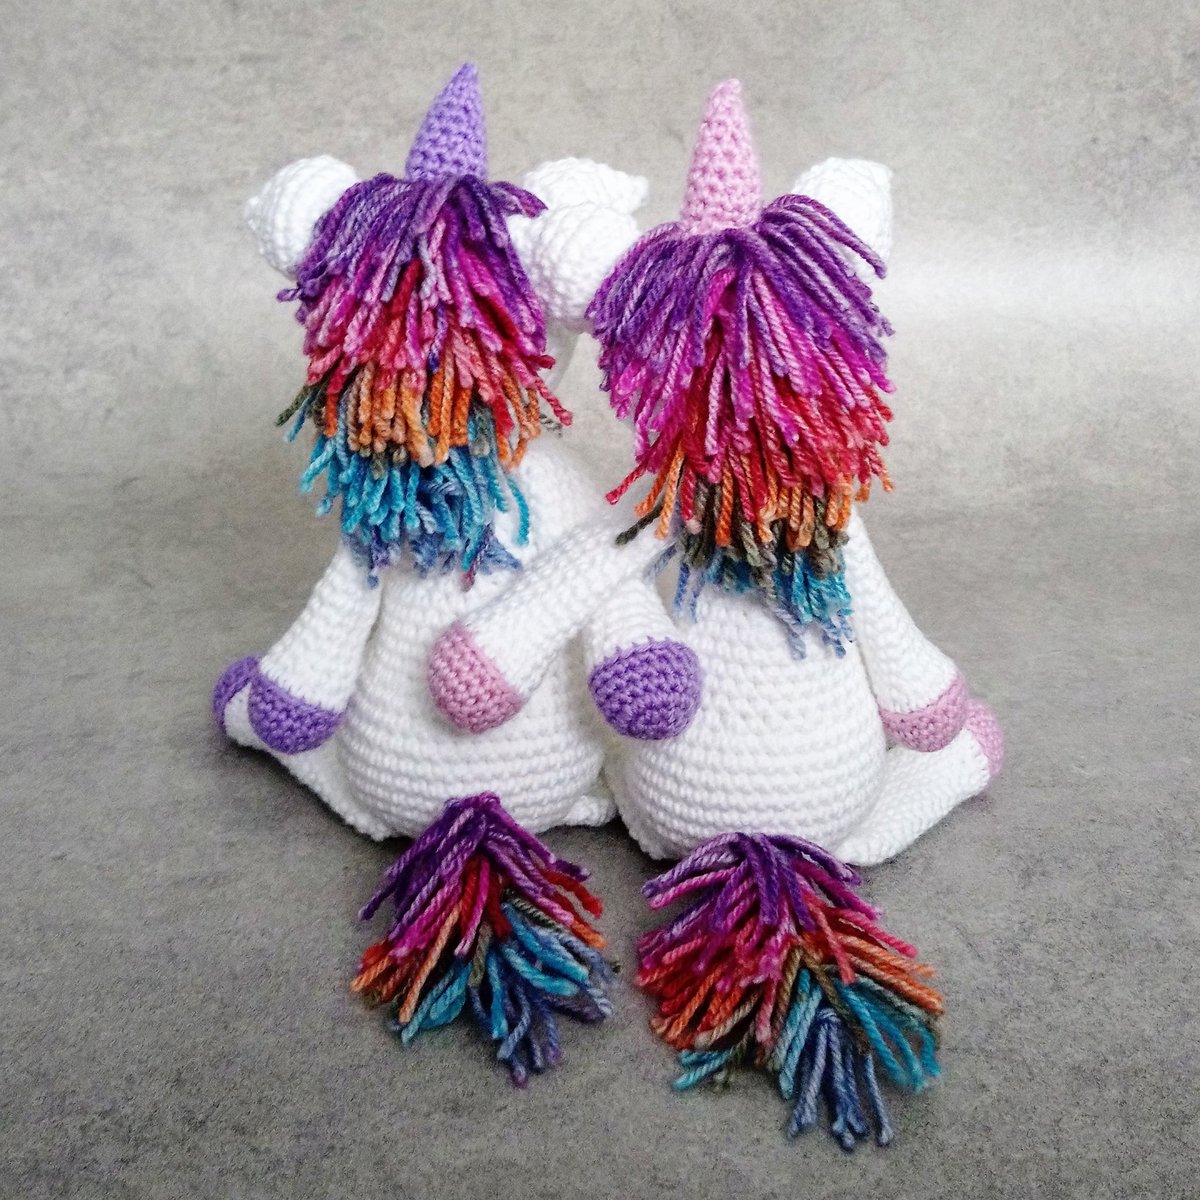 Sisters are different flowers from the same garden 🌼🌻

#crochet #crafts #unicorns #unicorn #unicorncrochet #unicorntoy #smallbusiness #uksmallbiz #UKBiz